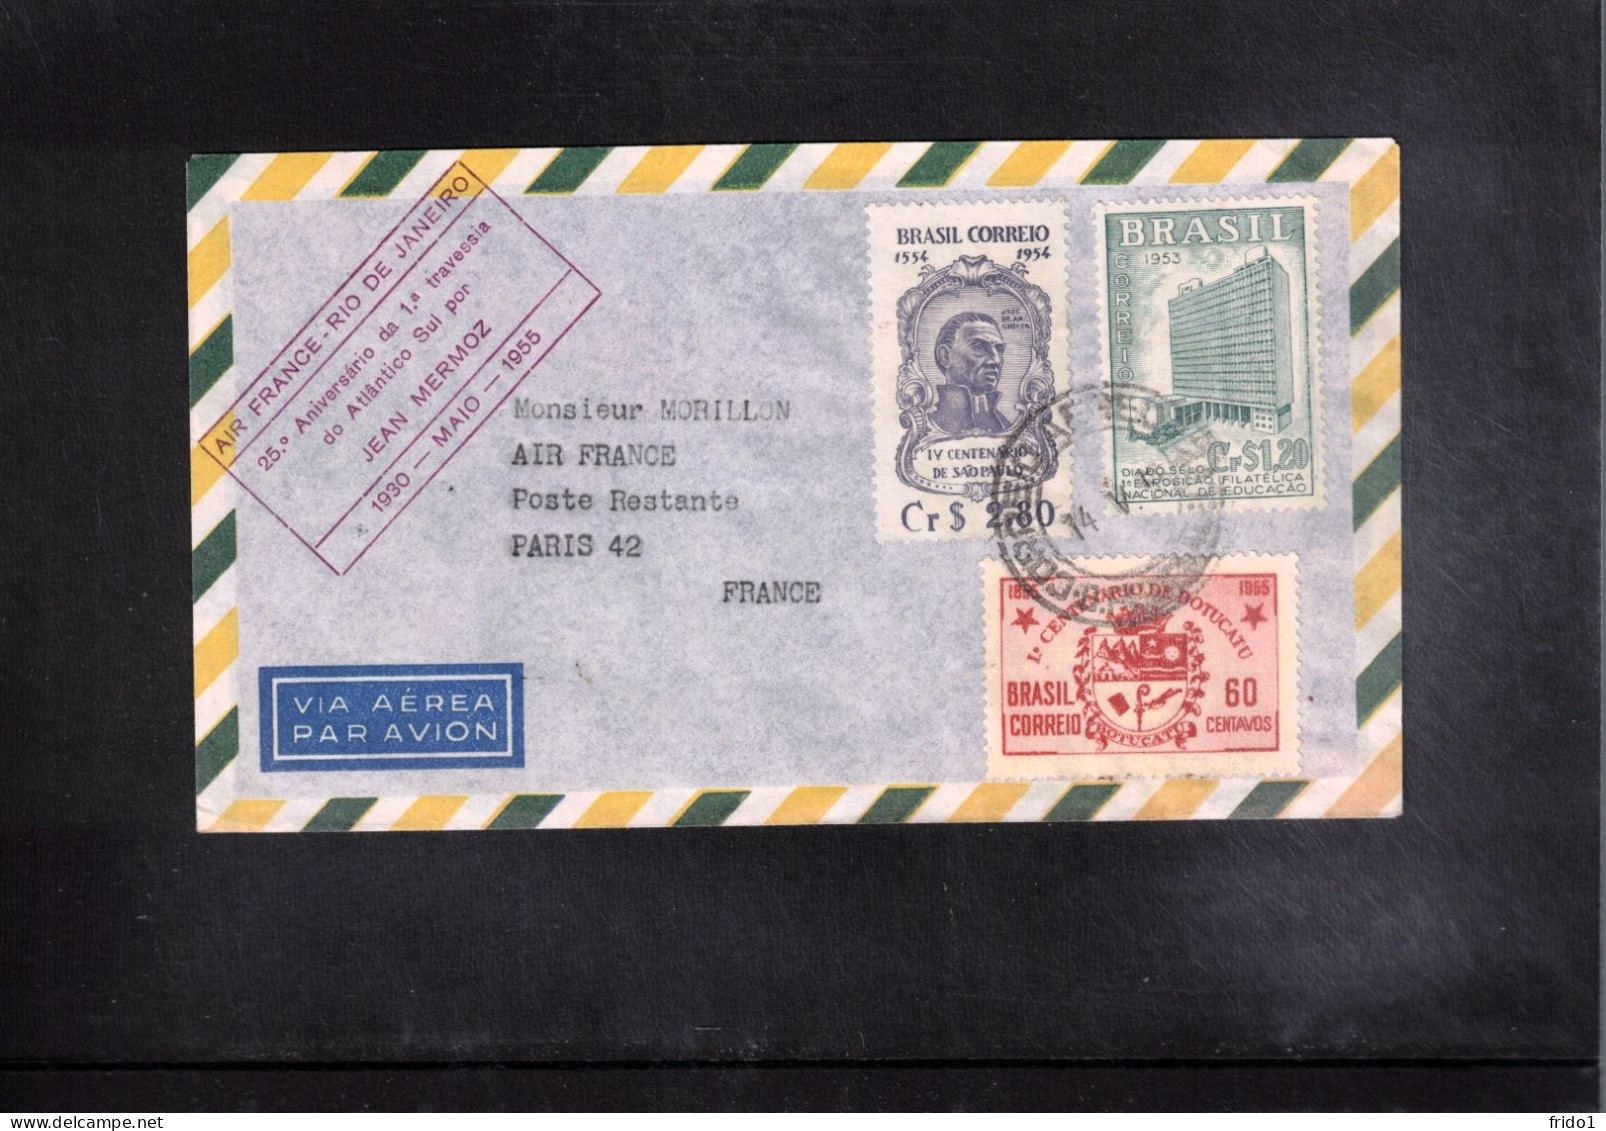 Brazil 1955 25th Anniversary Of The First Crossing Of Atlantic Rio De Janeiro - Paris By Air France Jean Mermoz - Briefe U. Dokumente